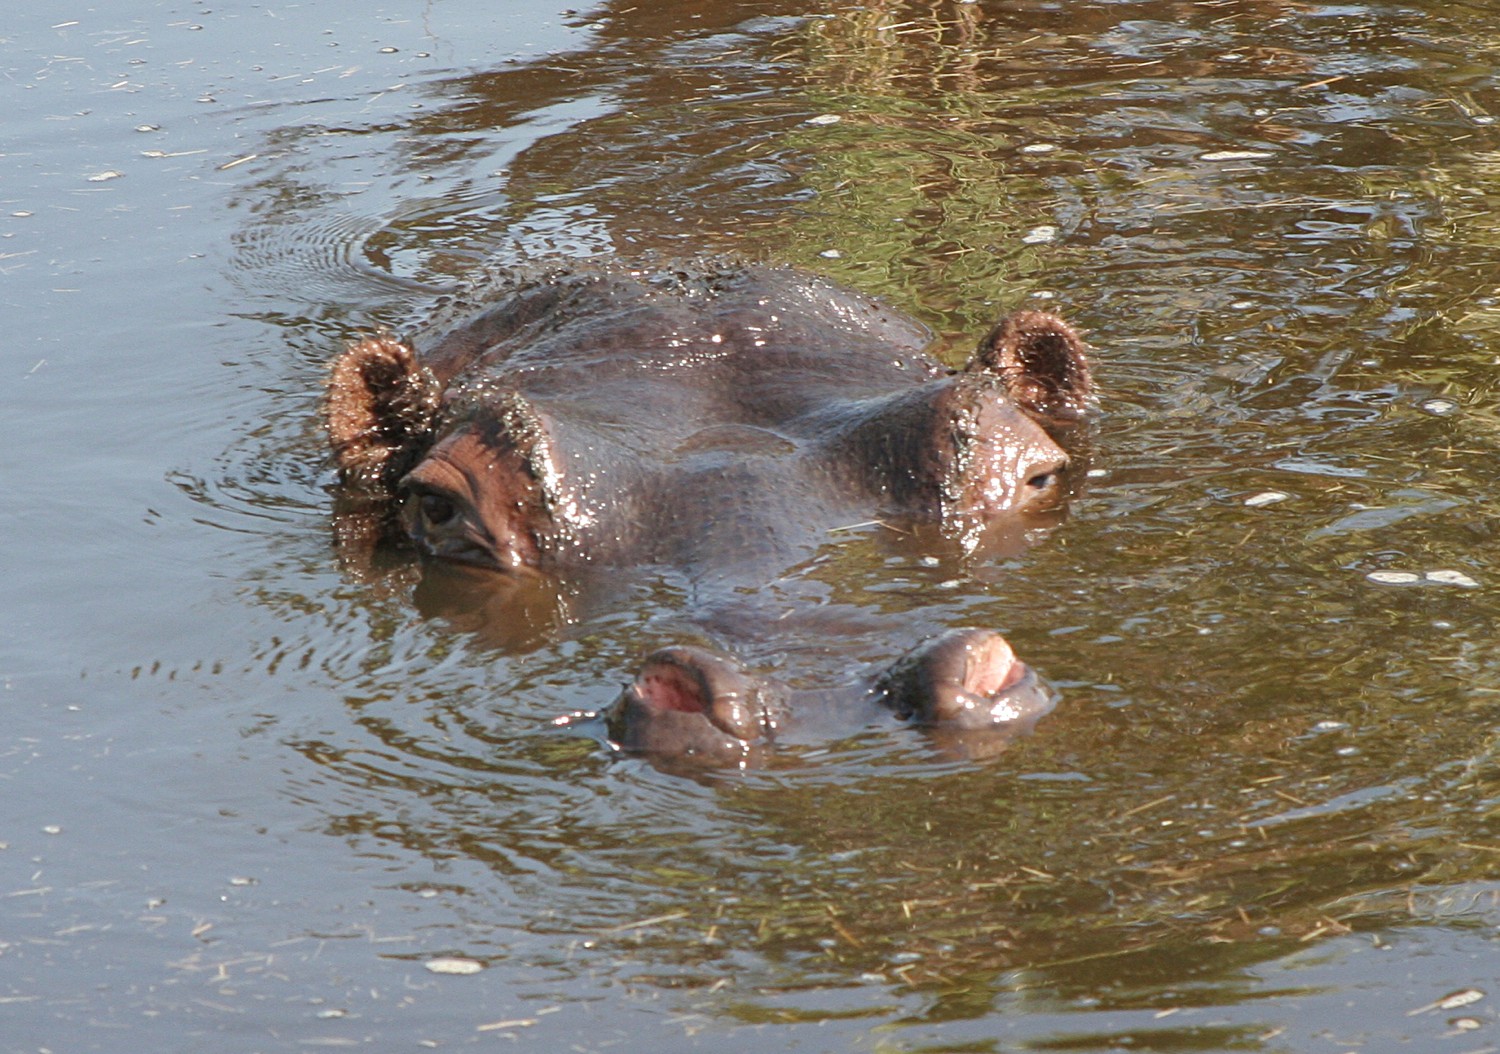 Hippo, Lurking!